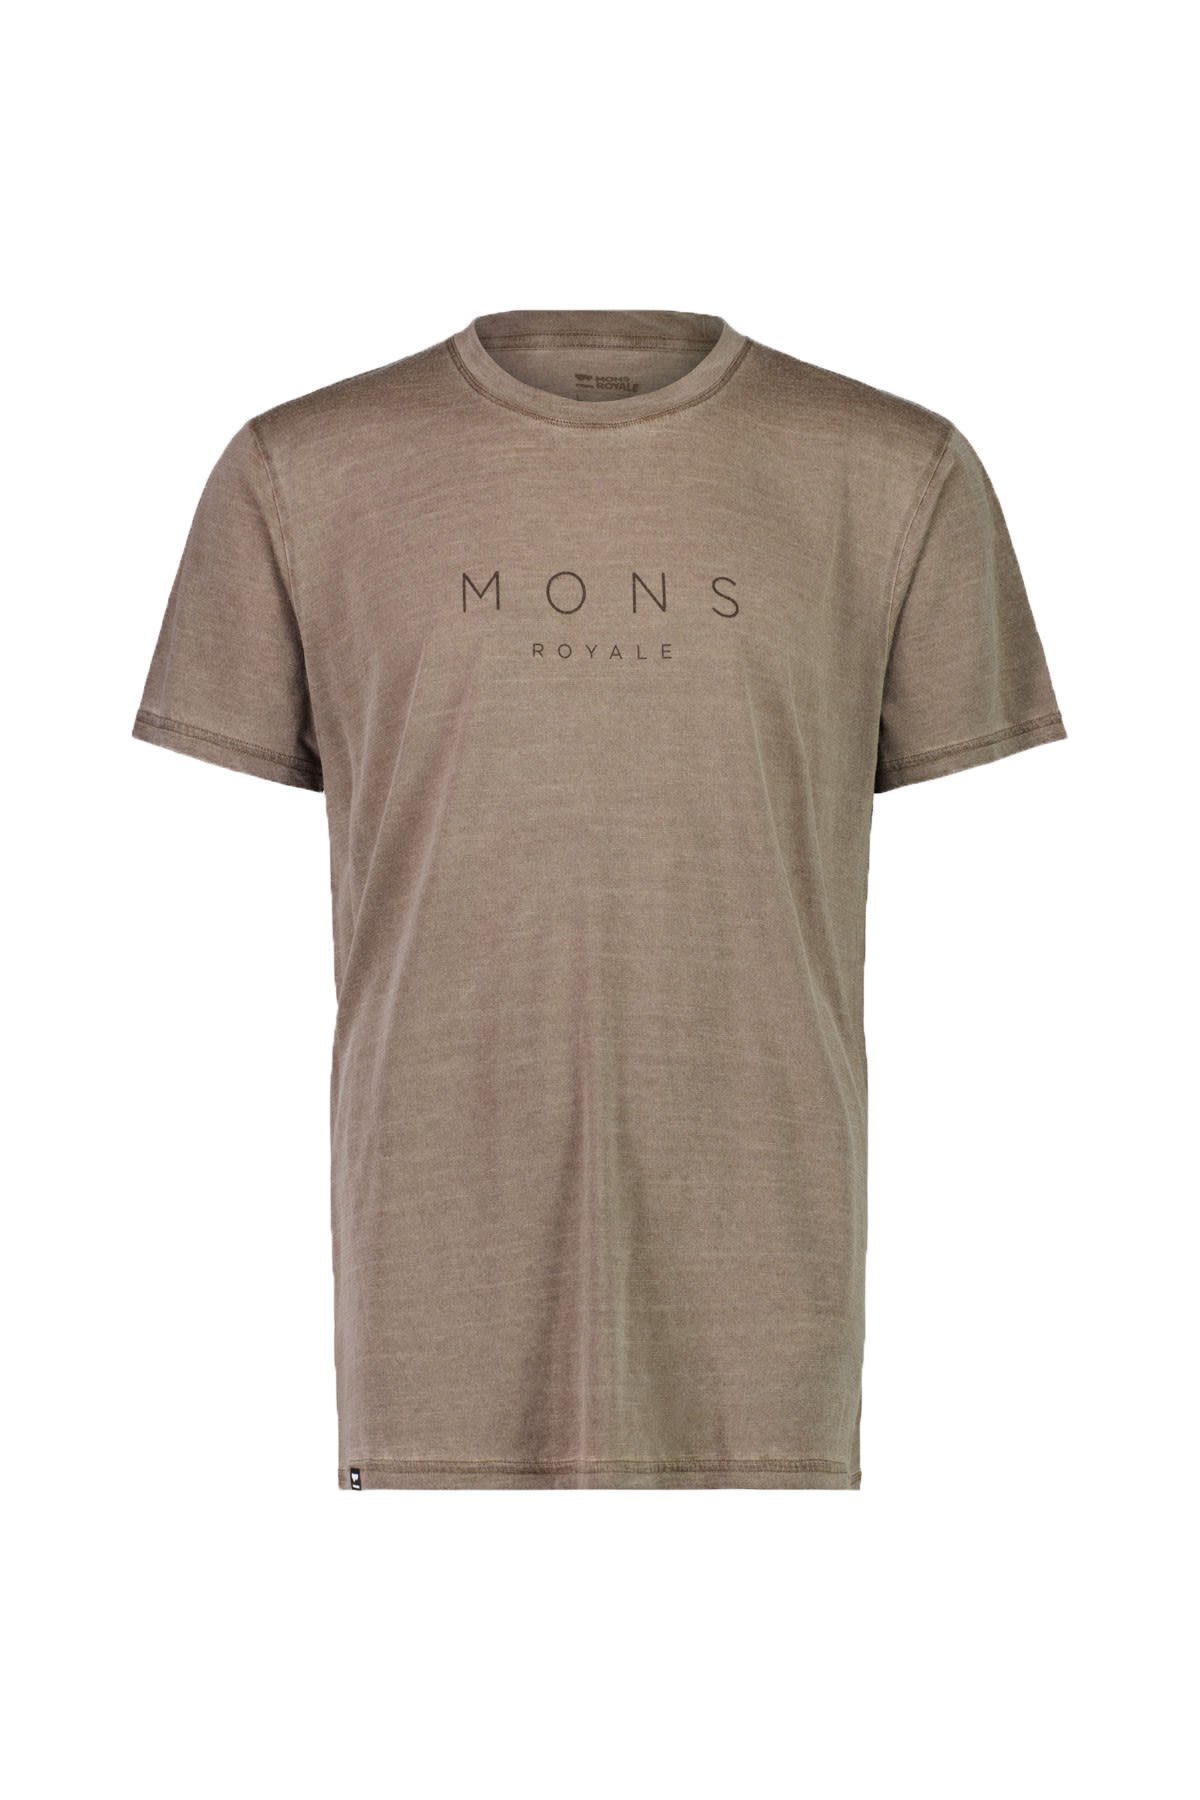 T-Shirt Zephyr Herren M Walnut T-shirt Mons Kurzarm-Shirt Royale Mons Royale